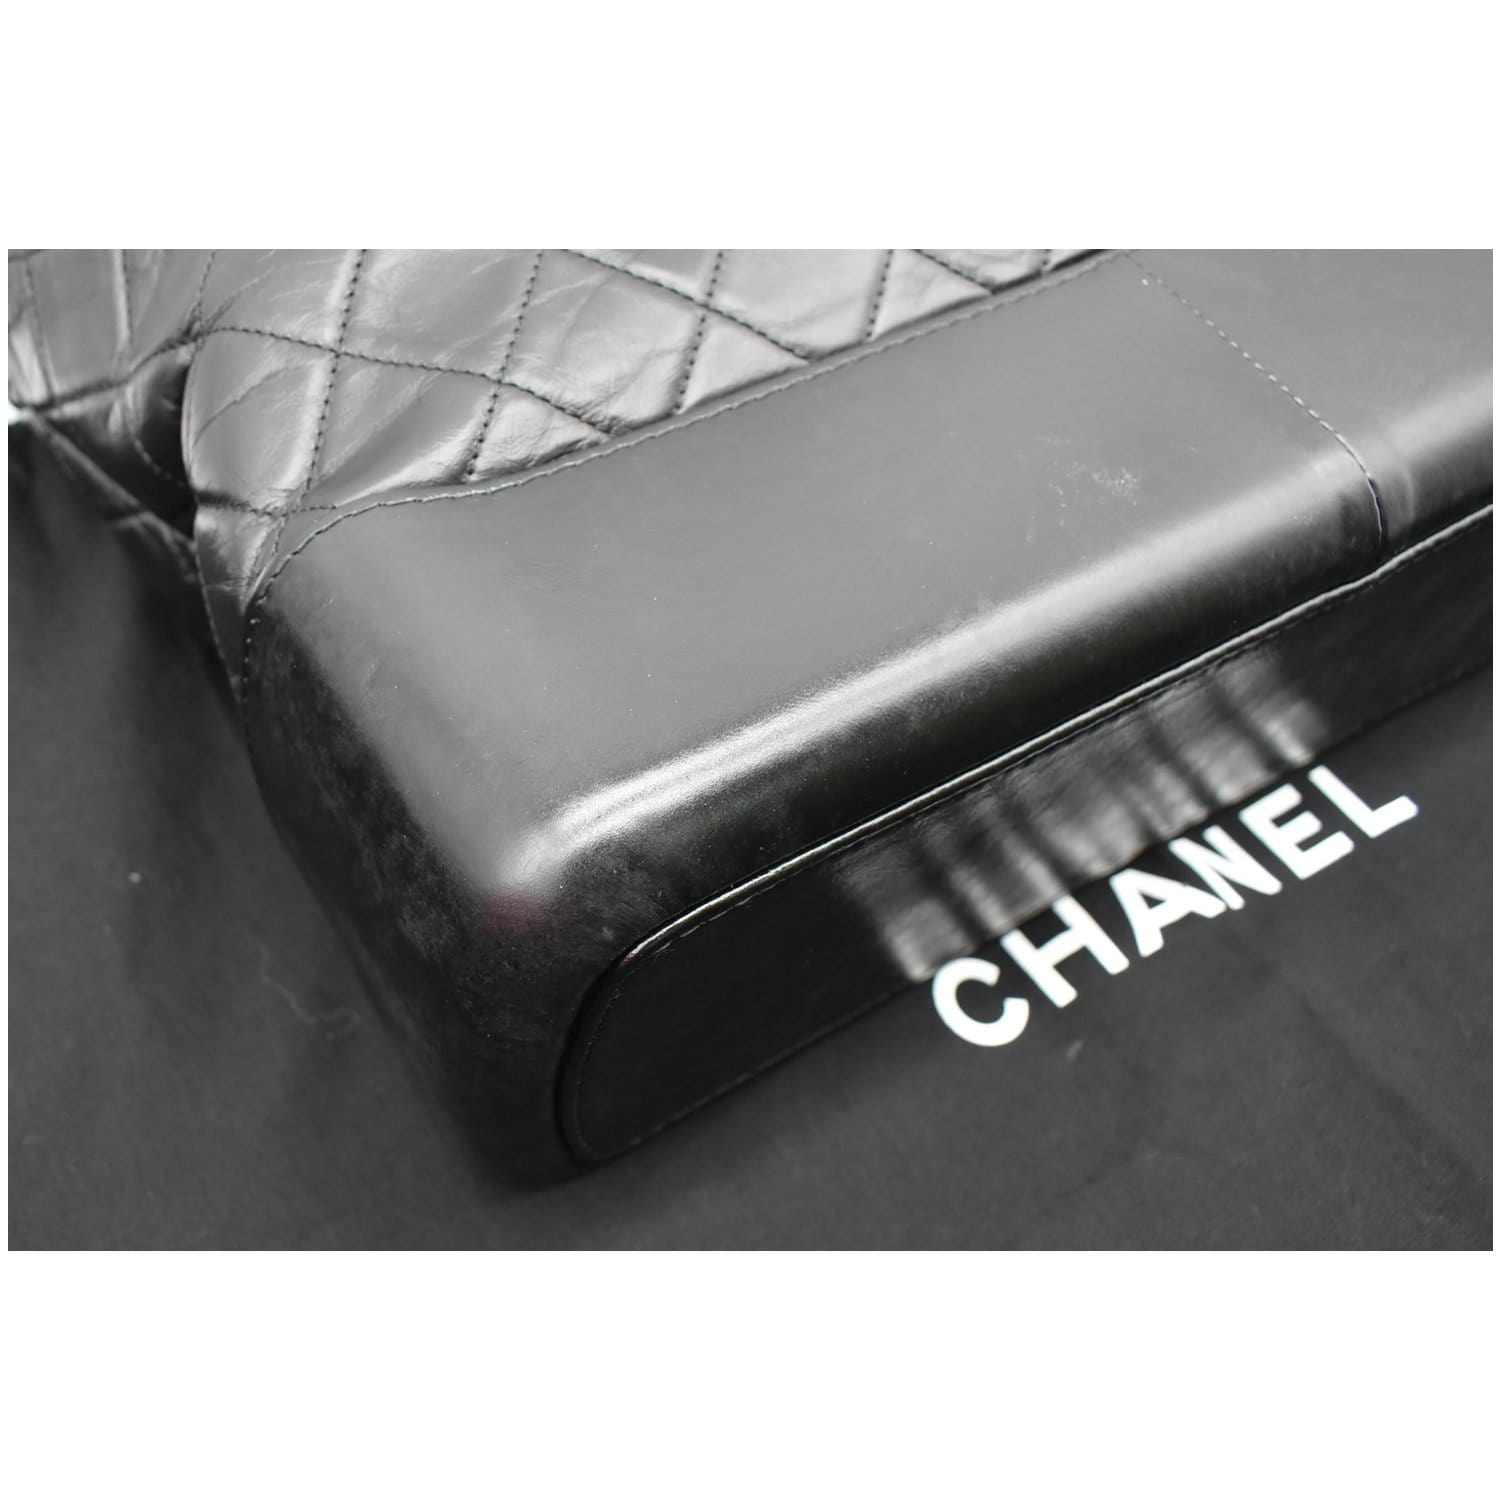 Chanel Large Gabrielle Shopping Tote - Black Totes, Handbags